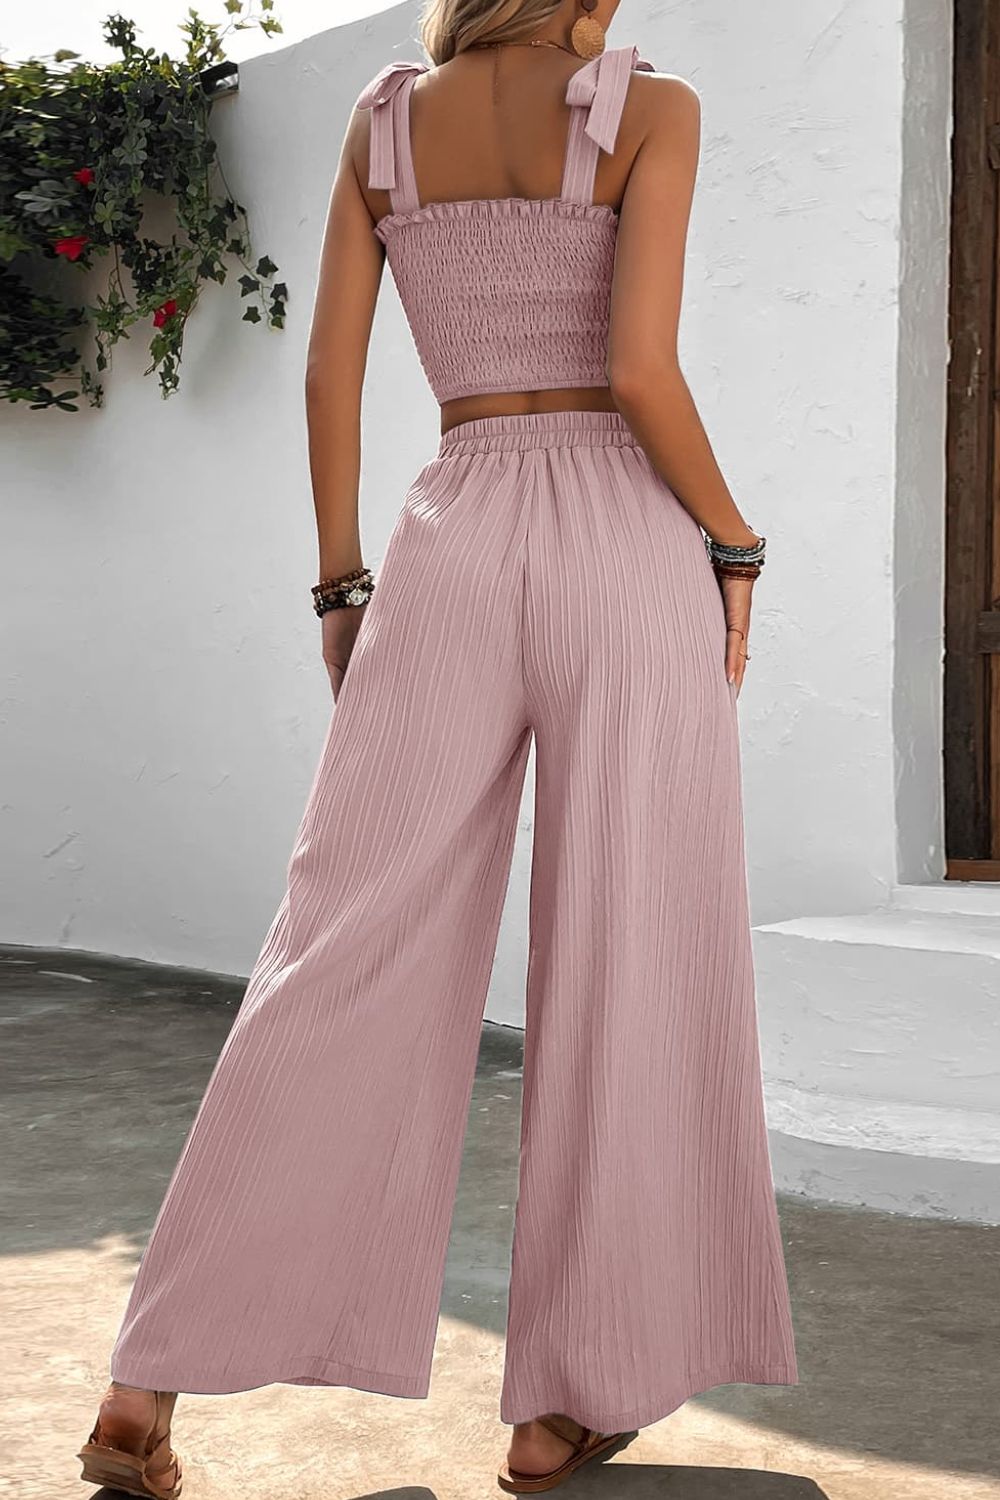 Tie Shoulder Smocked Crop Top and Wide Leg Pants Set - Fashion Girl Online Store